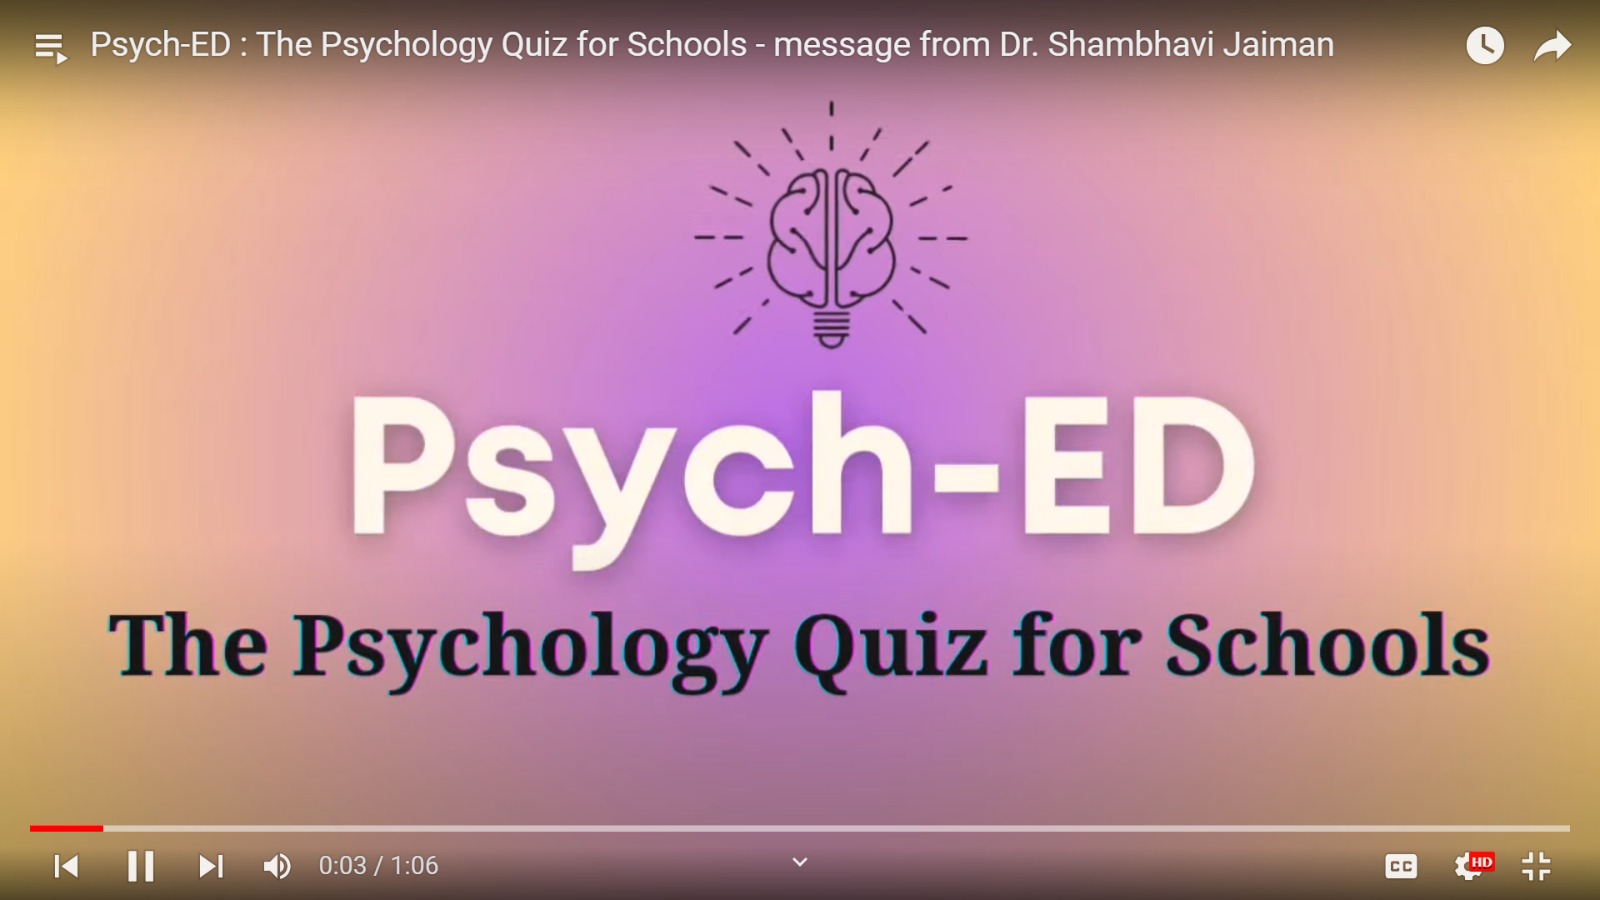 Psych-ED : The Psychology Quiz for Schools - message from Dr. Shambhavi Jaiman